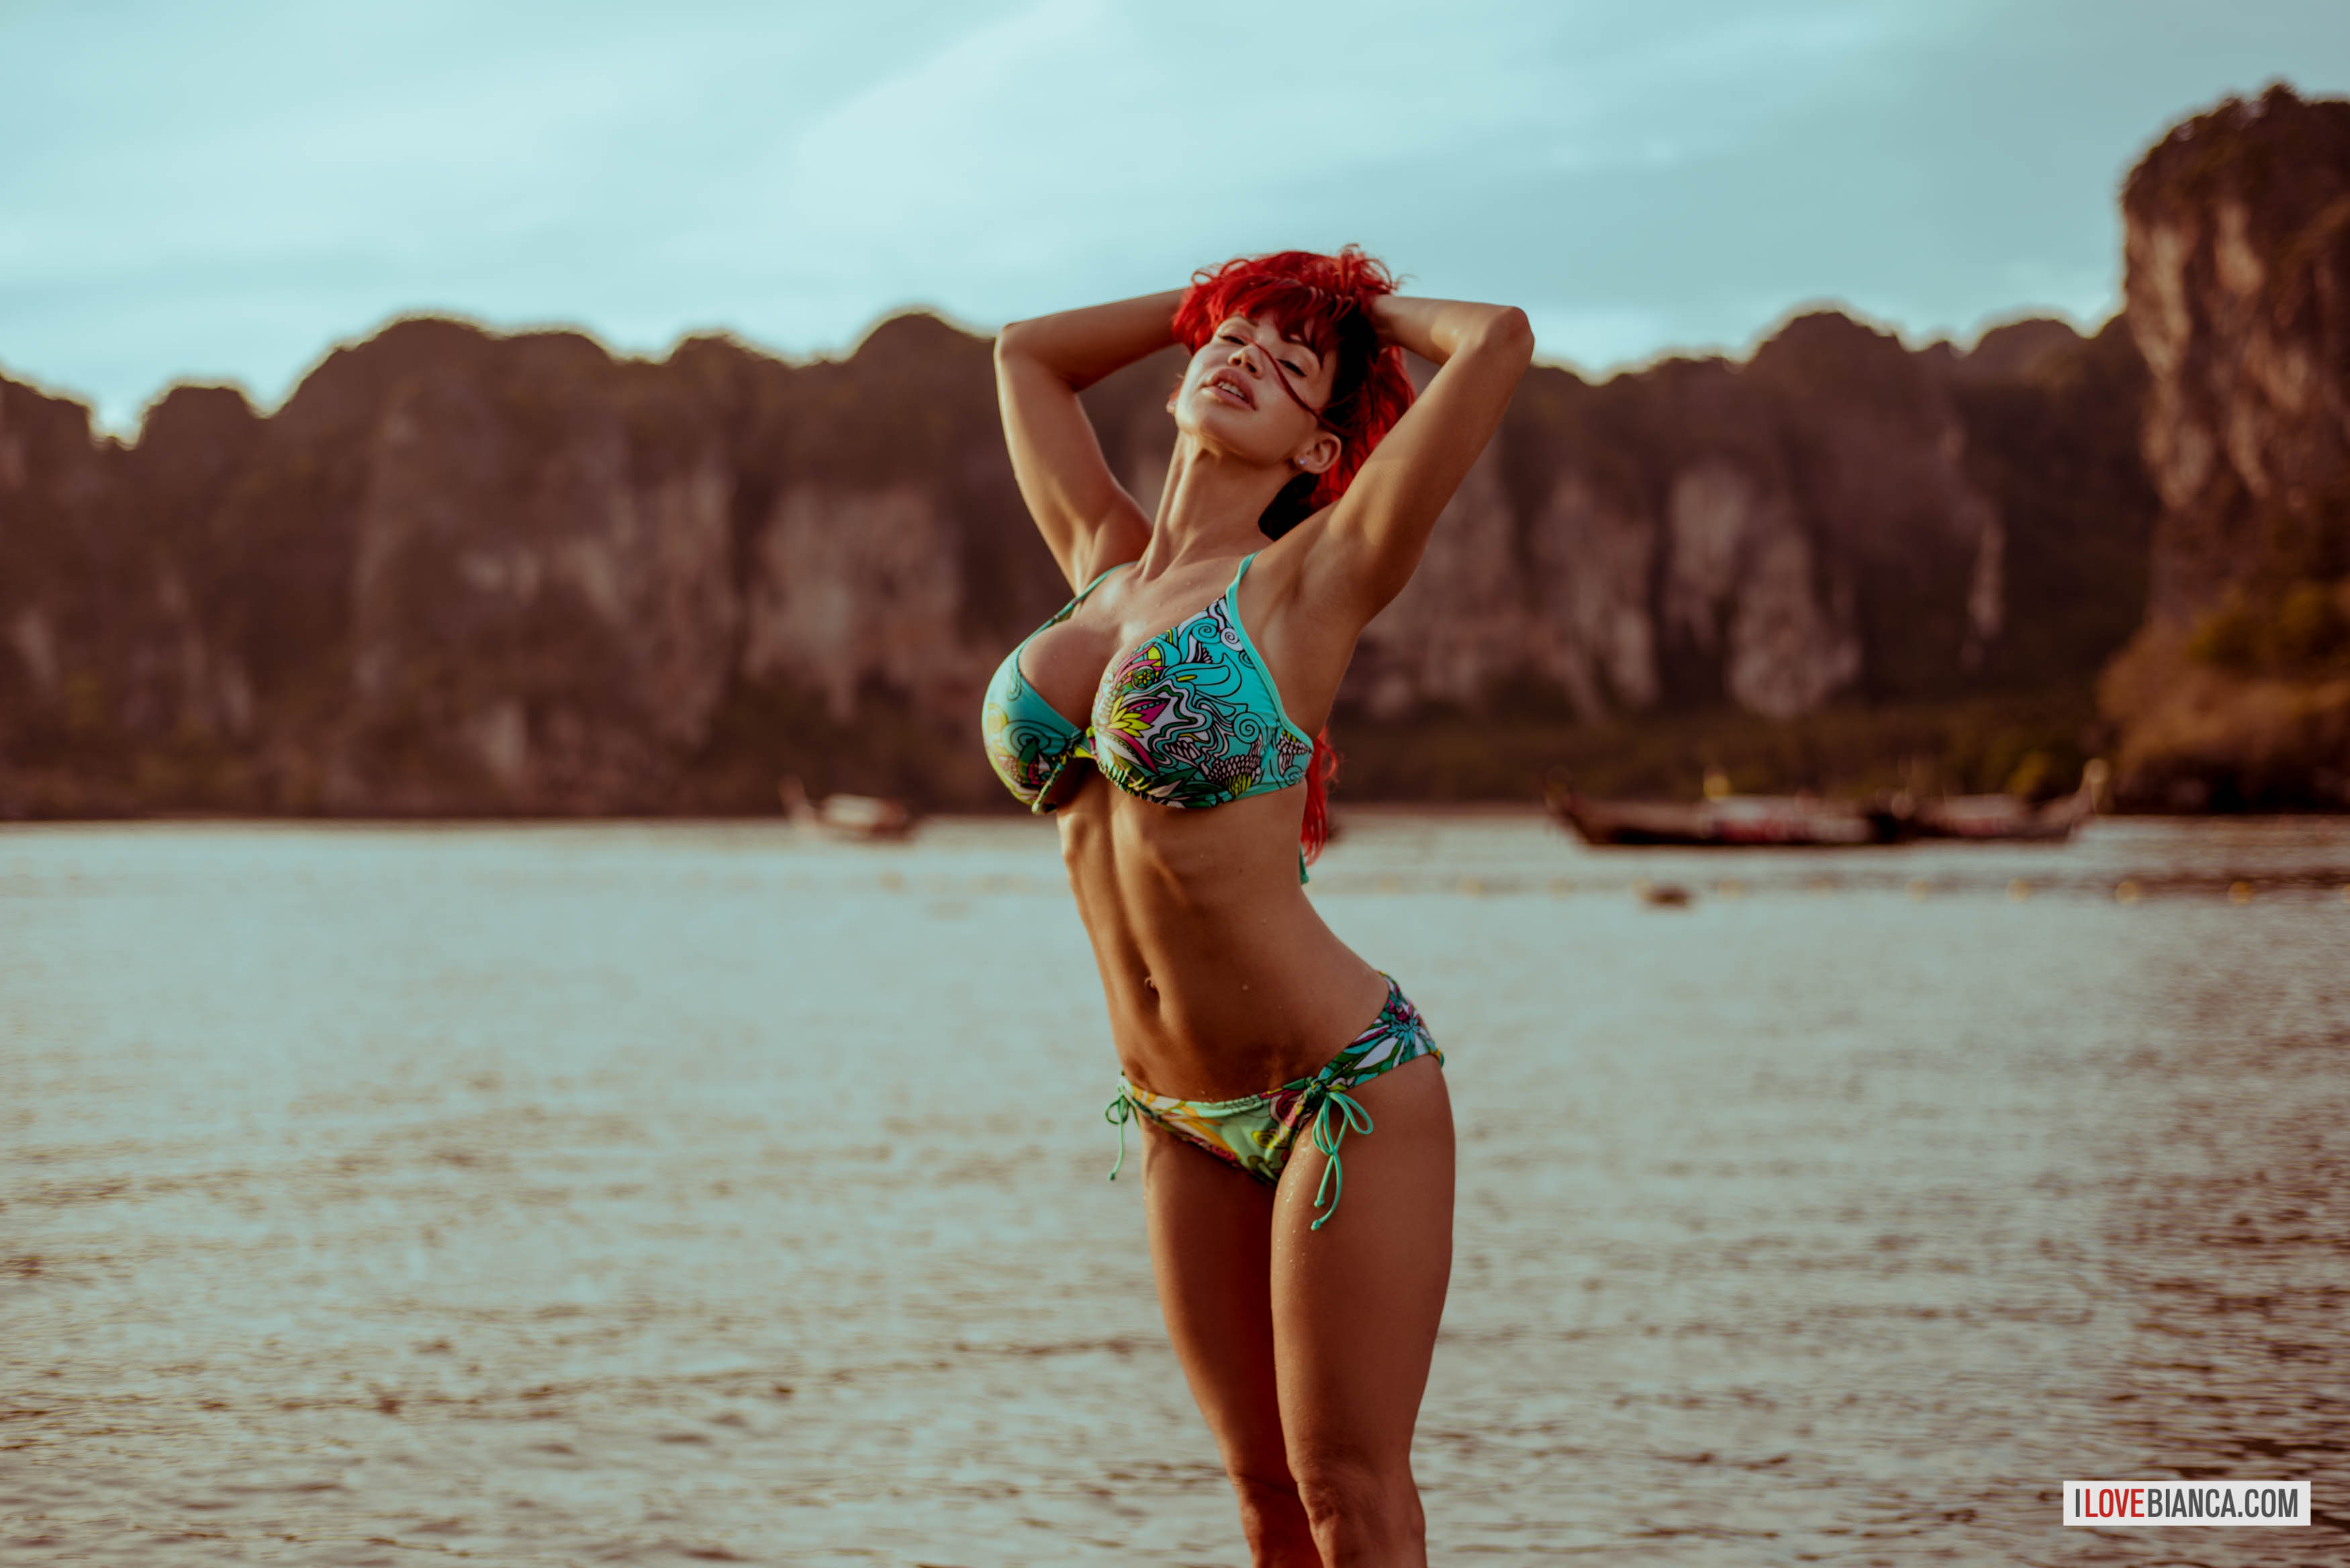 Sold Turquoise Under Cup Bikini Bianca Beauchamp